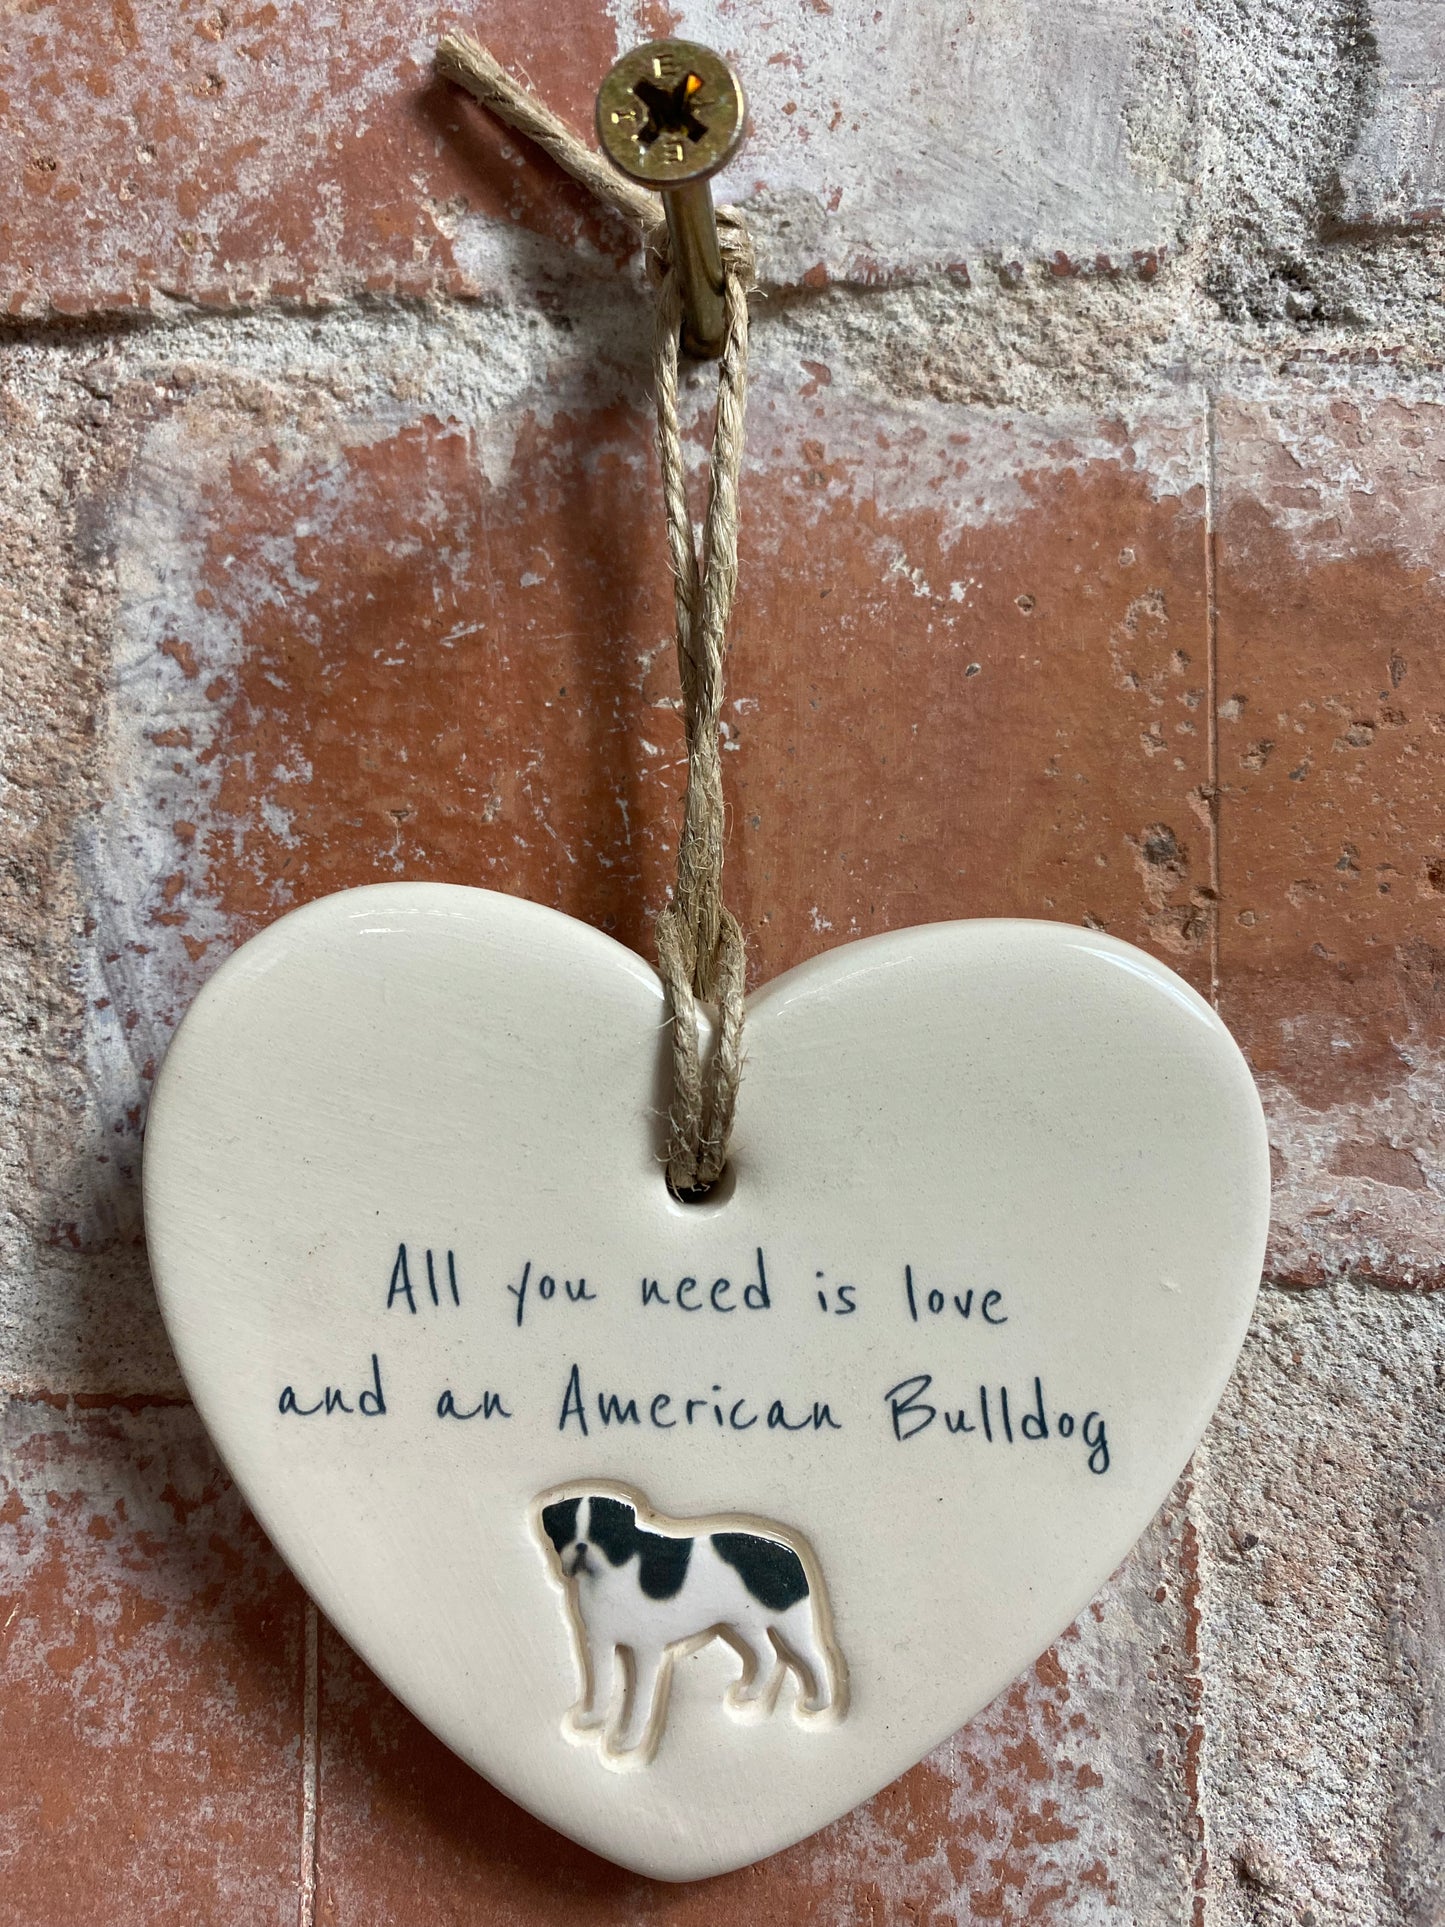 American Bulldog ceramic heart